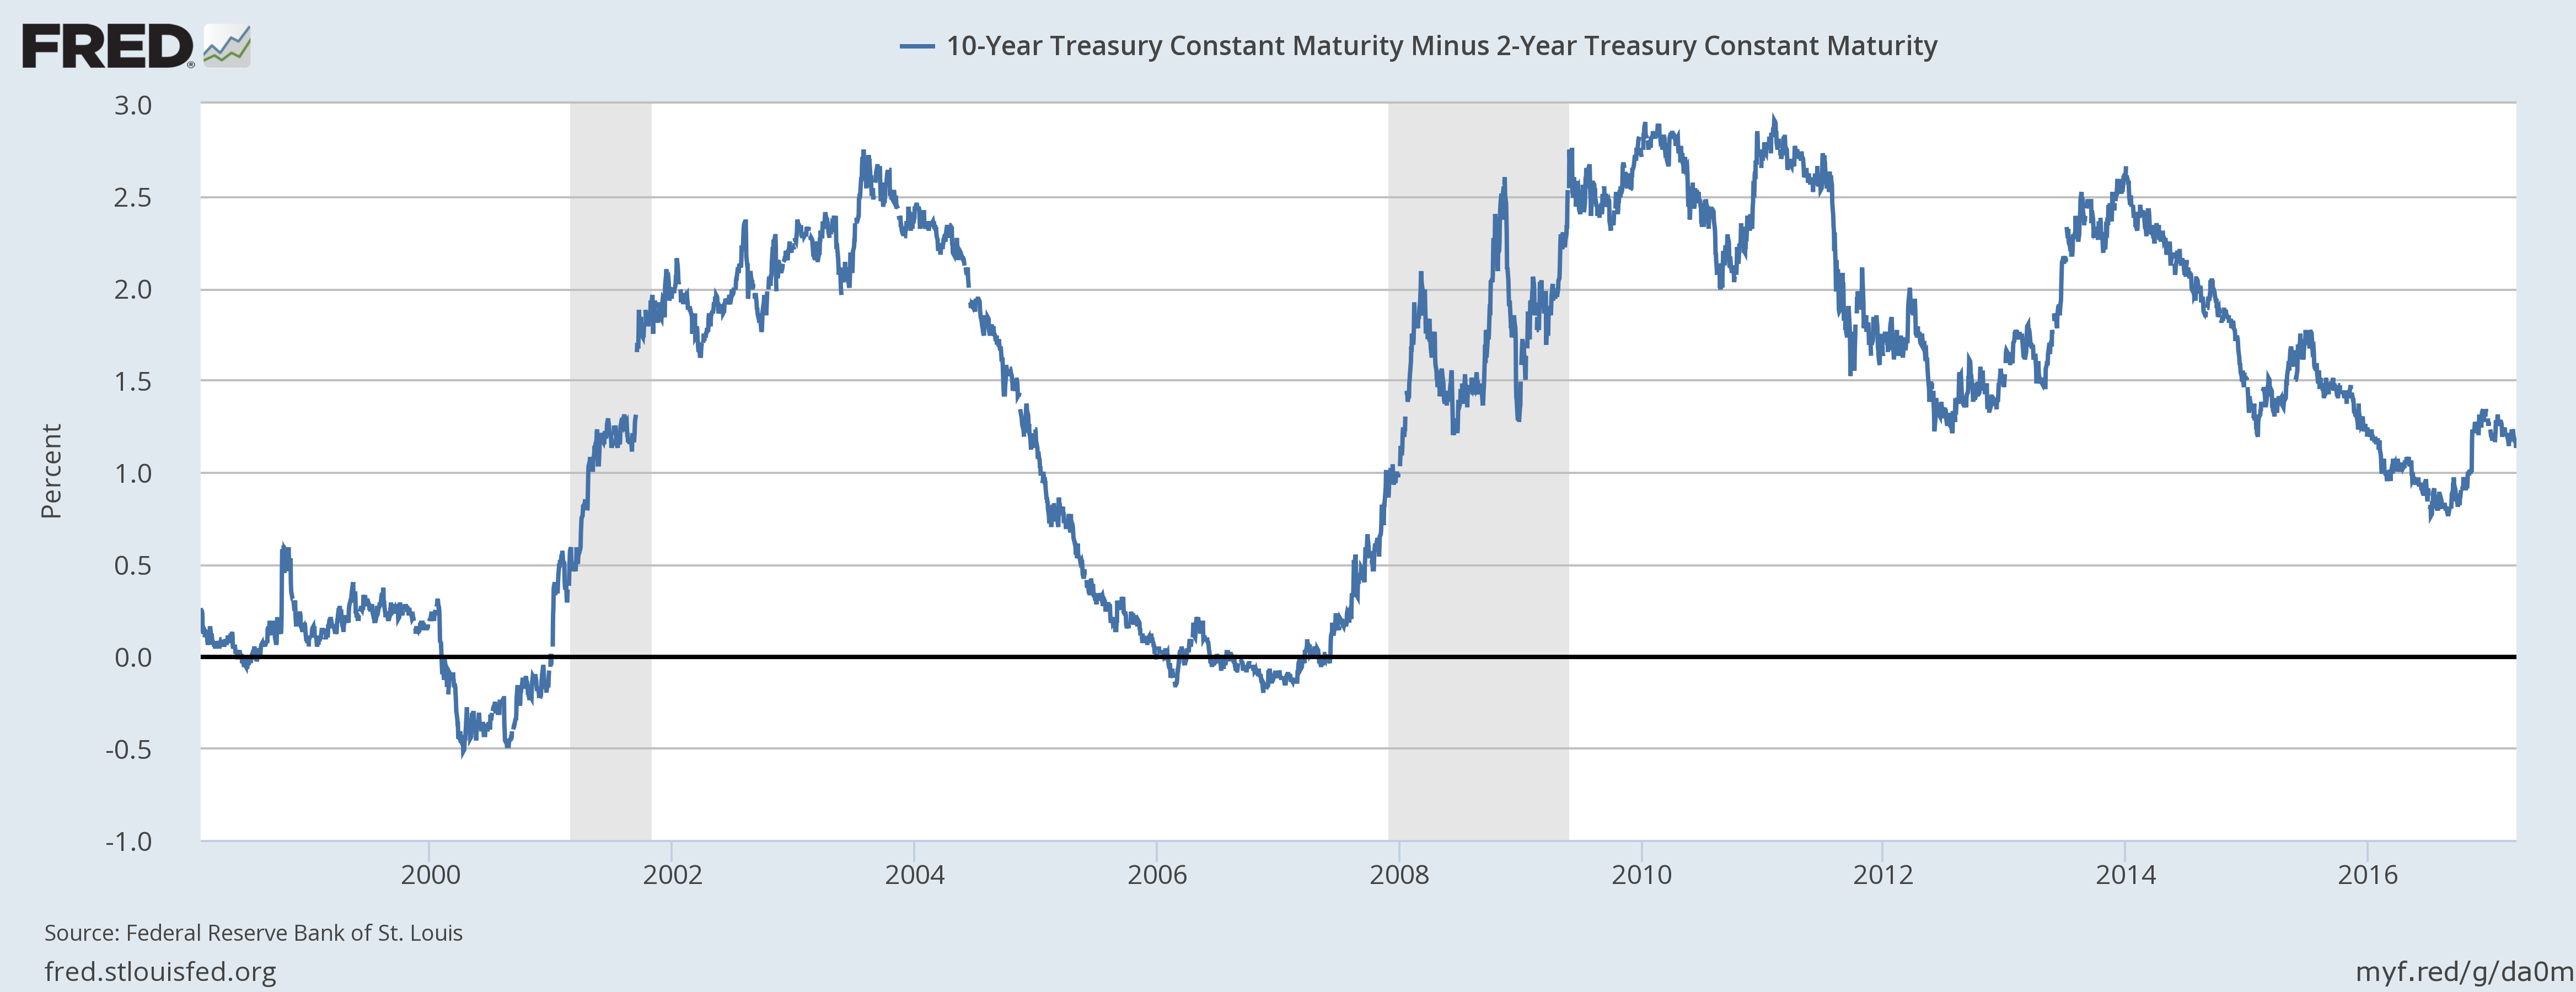 10-Year Treasury Constant Maturity Minus 2 Year Constant Maturity